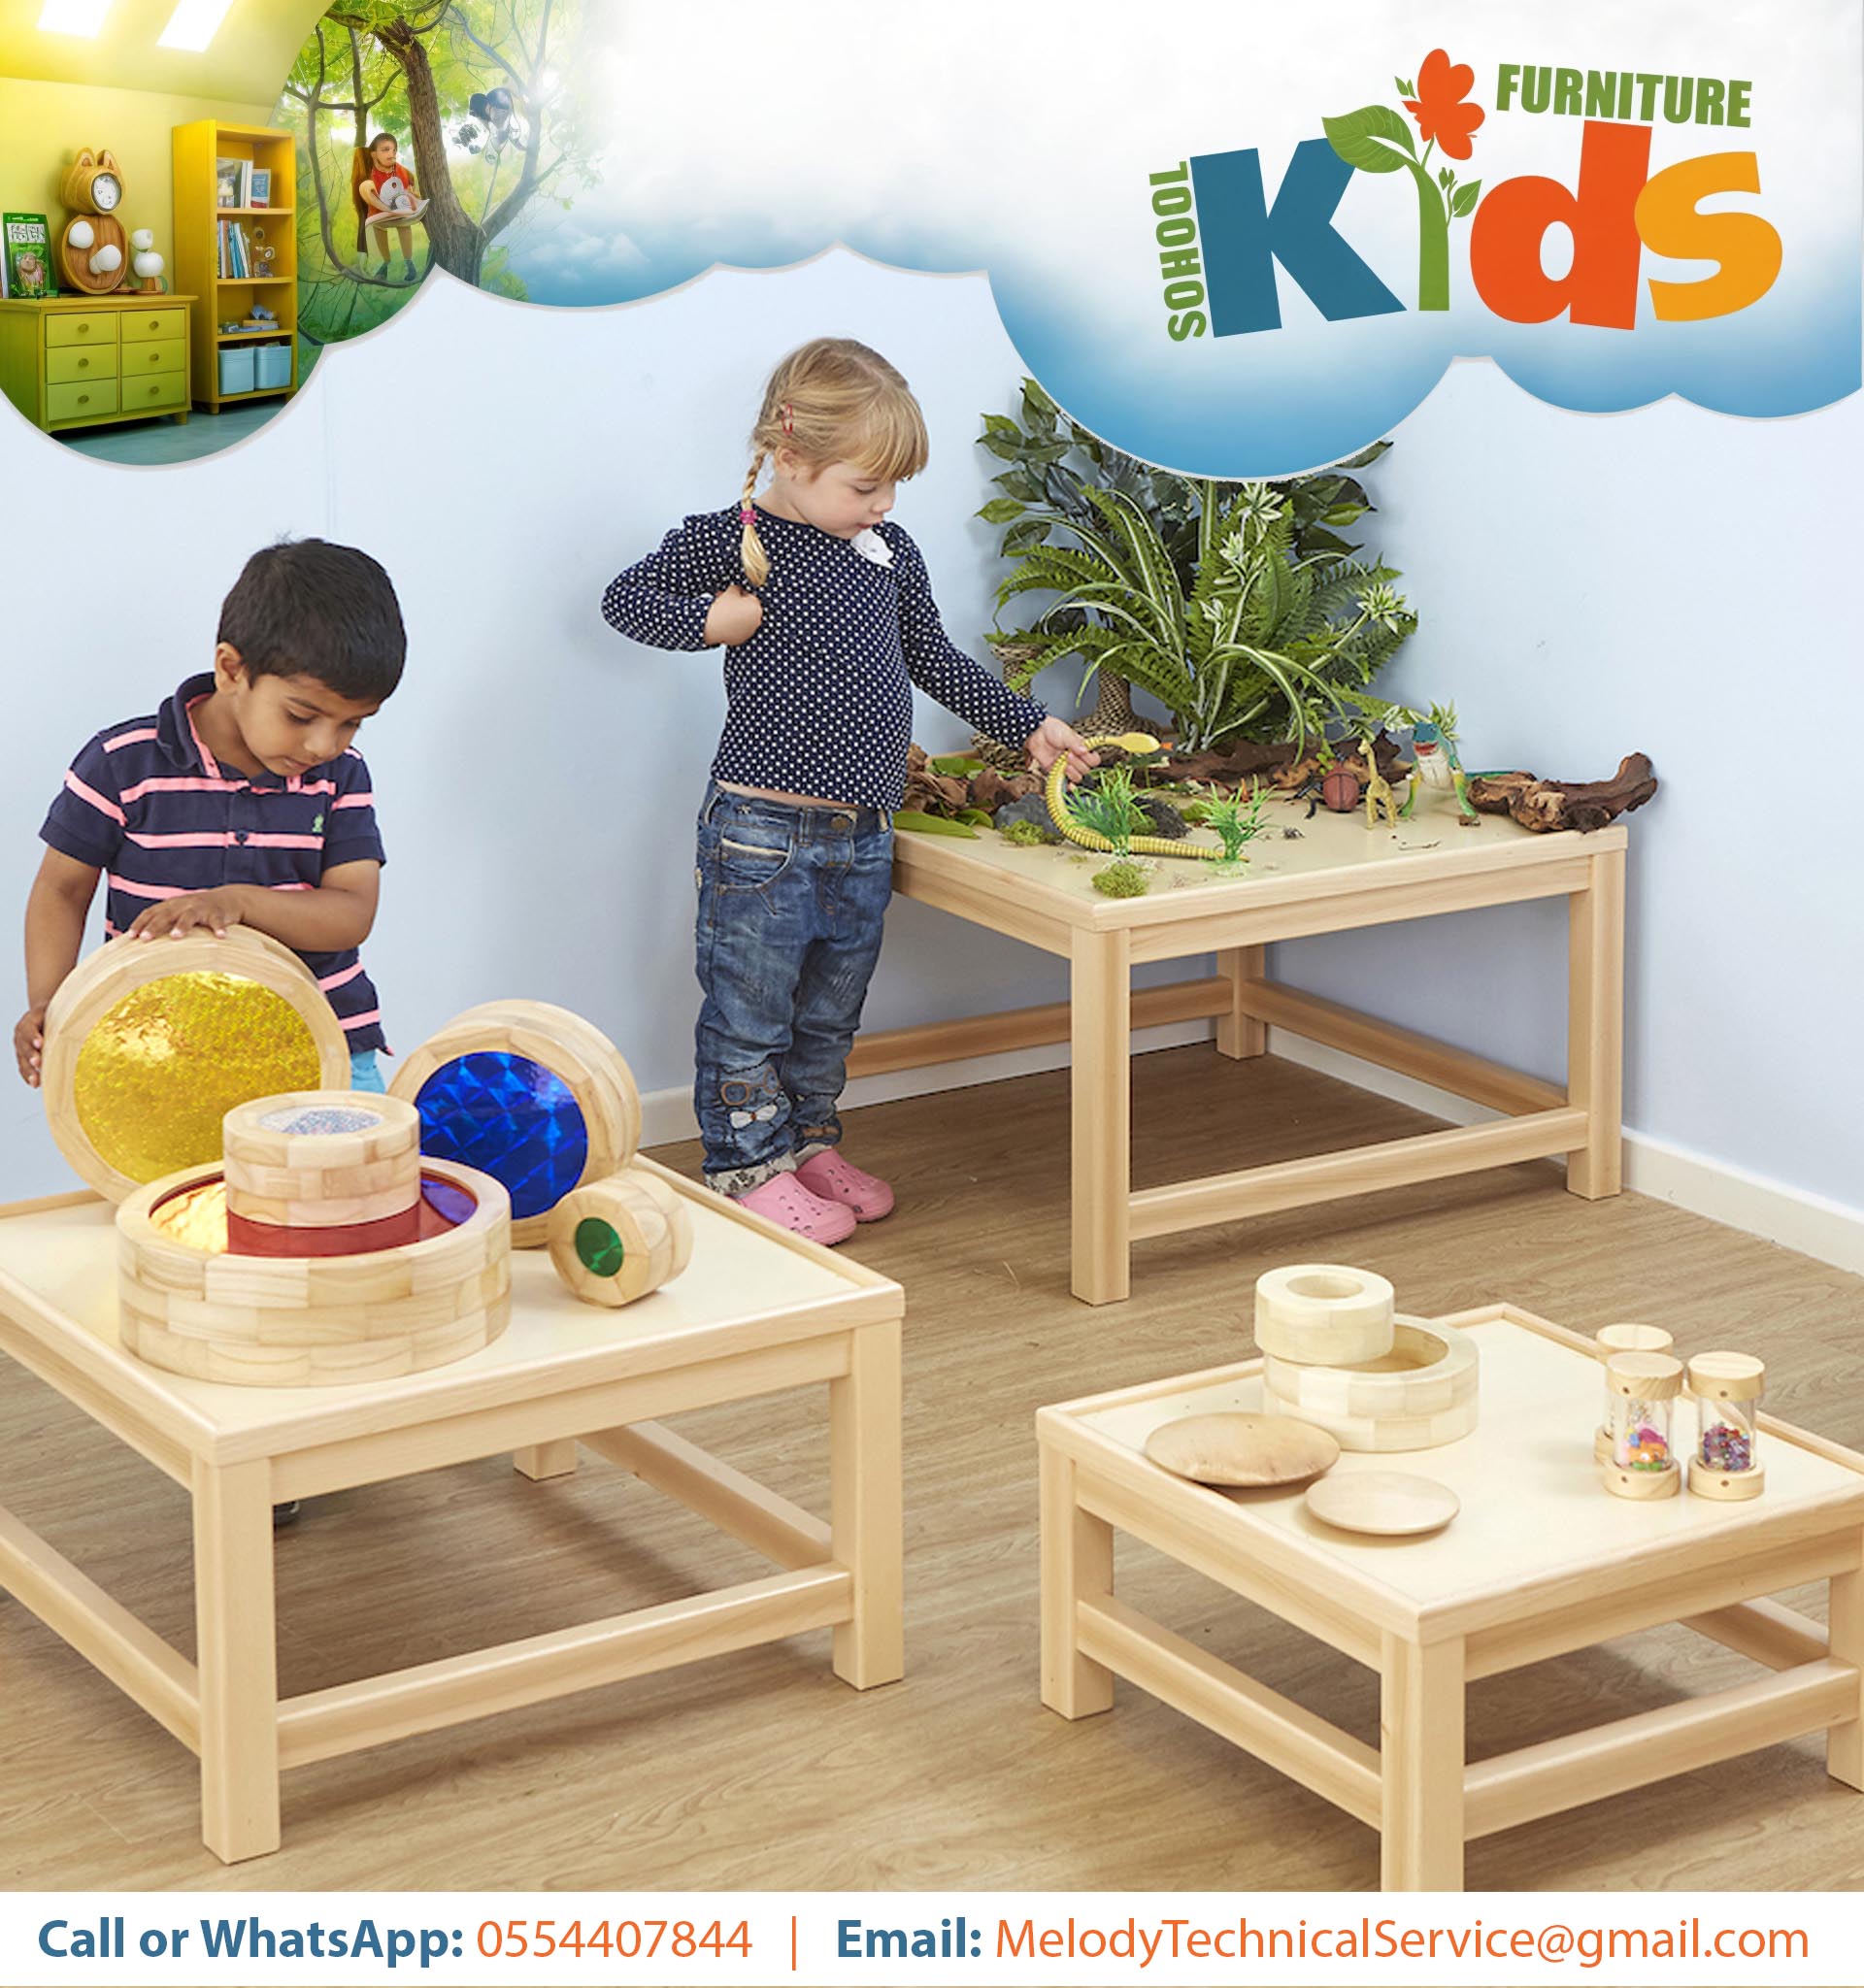 Kids Furniture in Dubai | Kids Bedroom Furniture in UAE